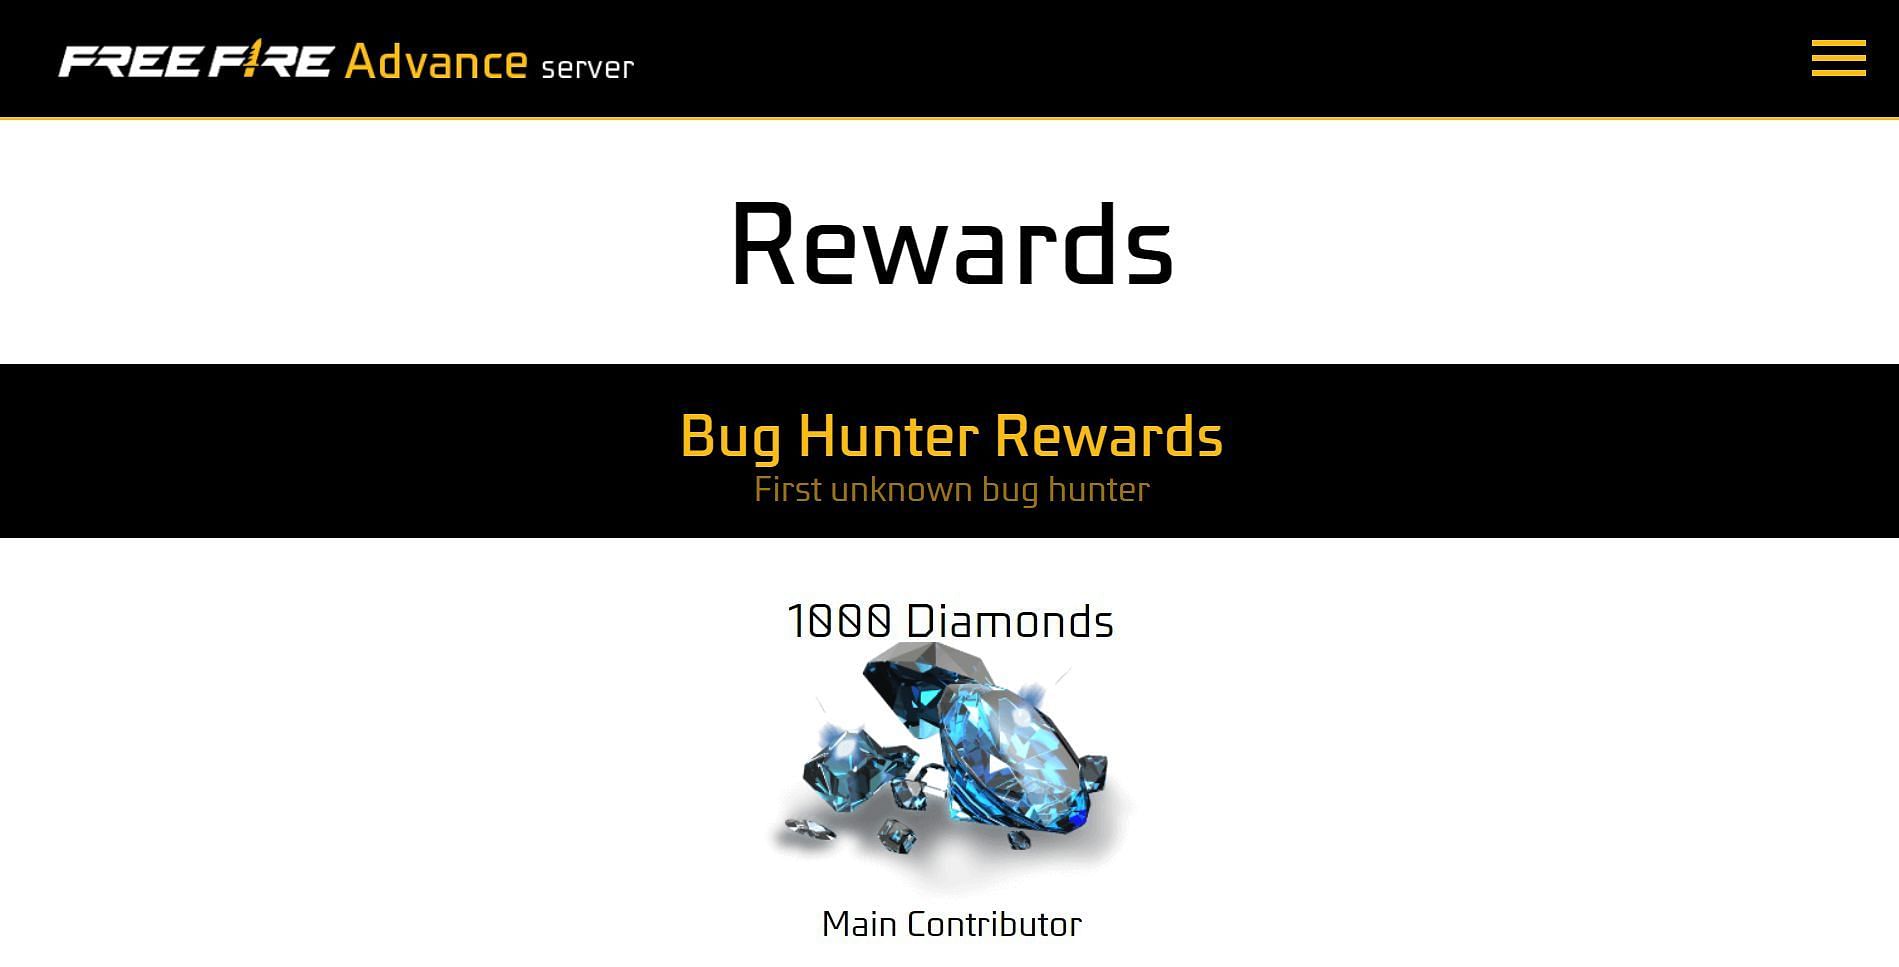 You will receive diamonds upon reporting bugs (Image via Garena)